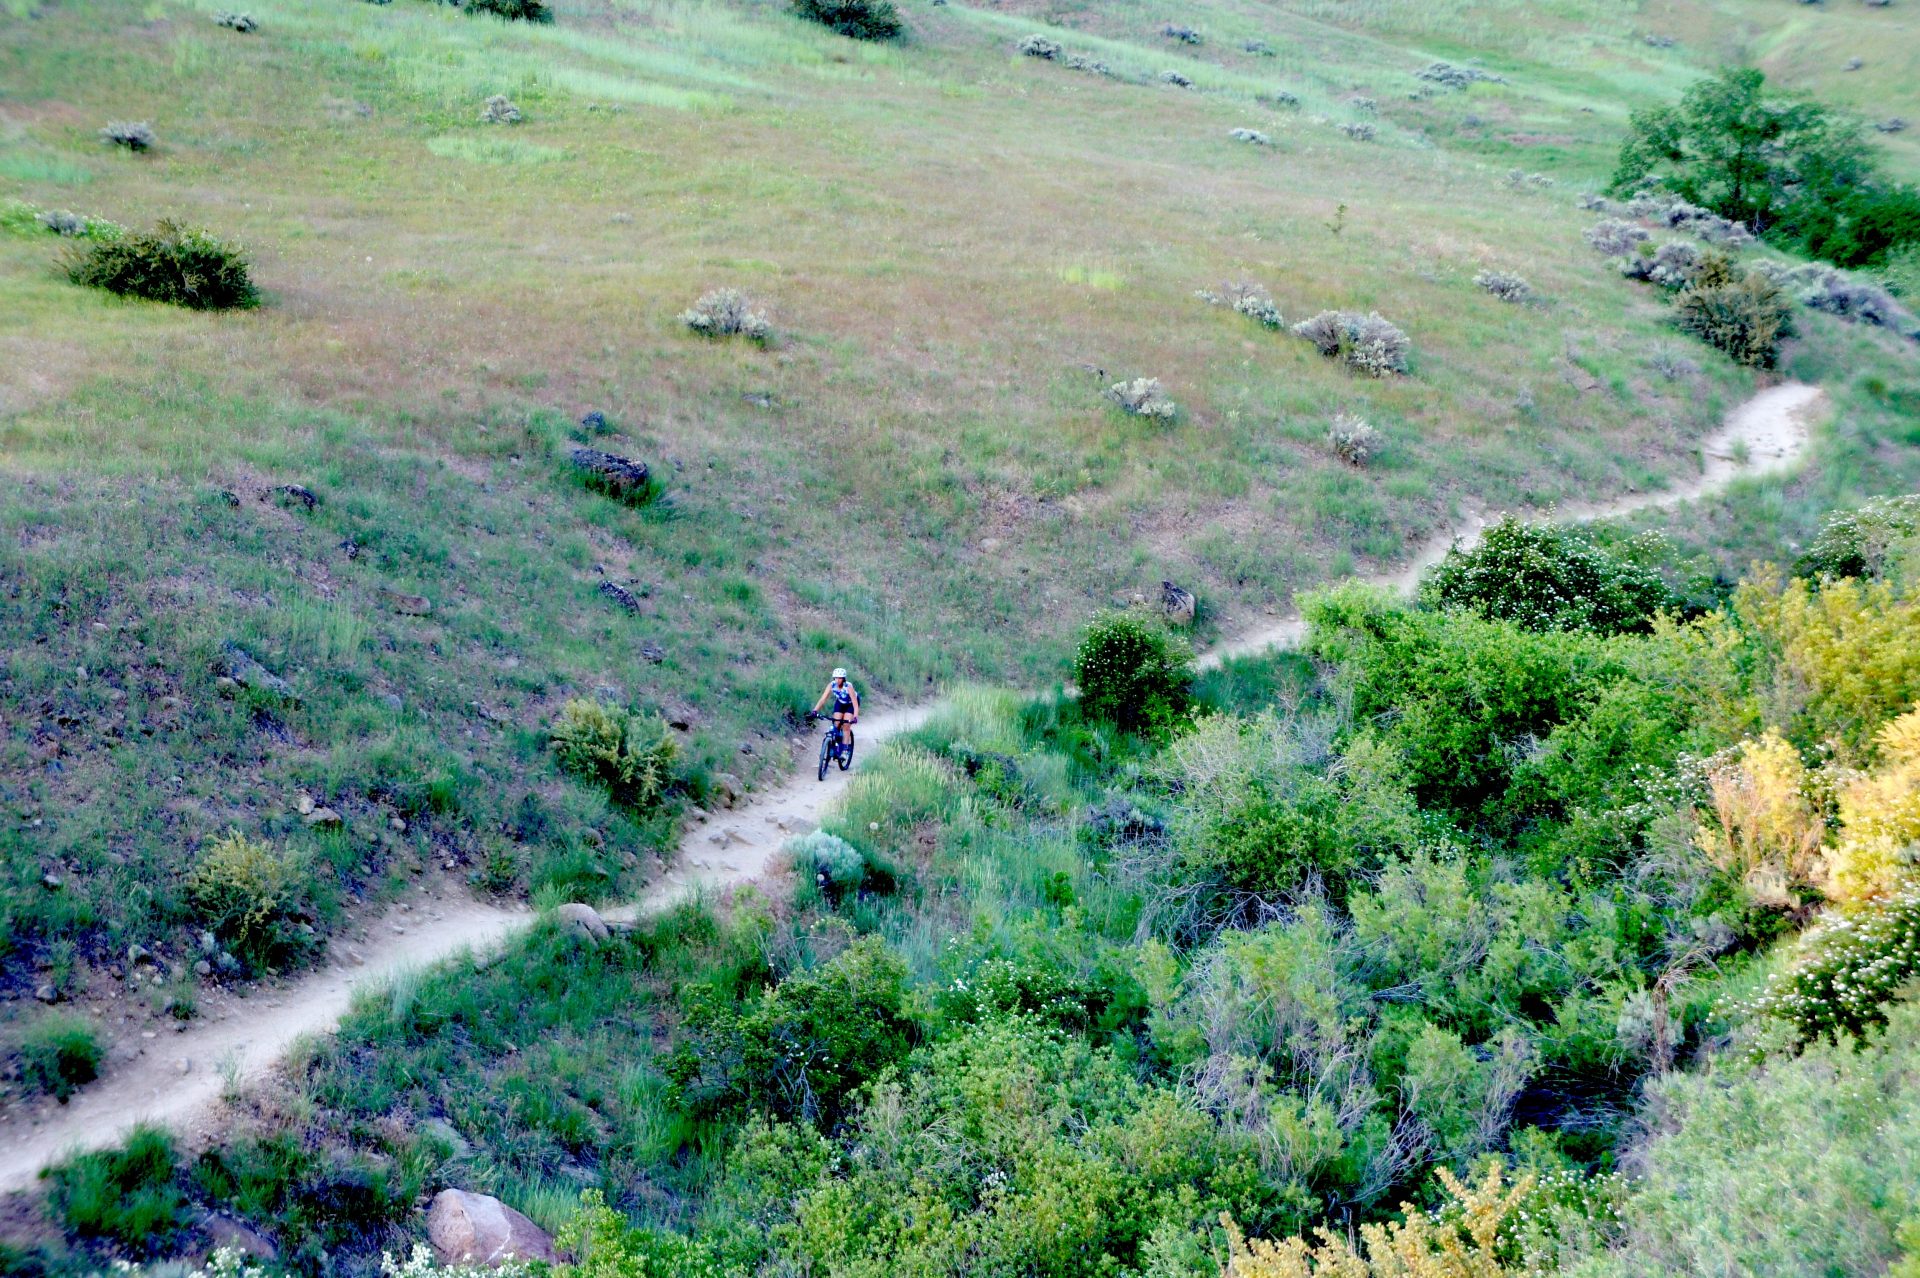 mountain biker descending a rocky trail next to a stream